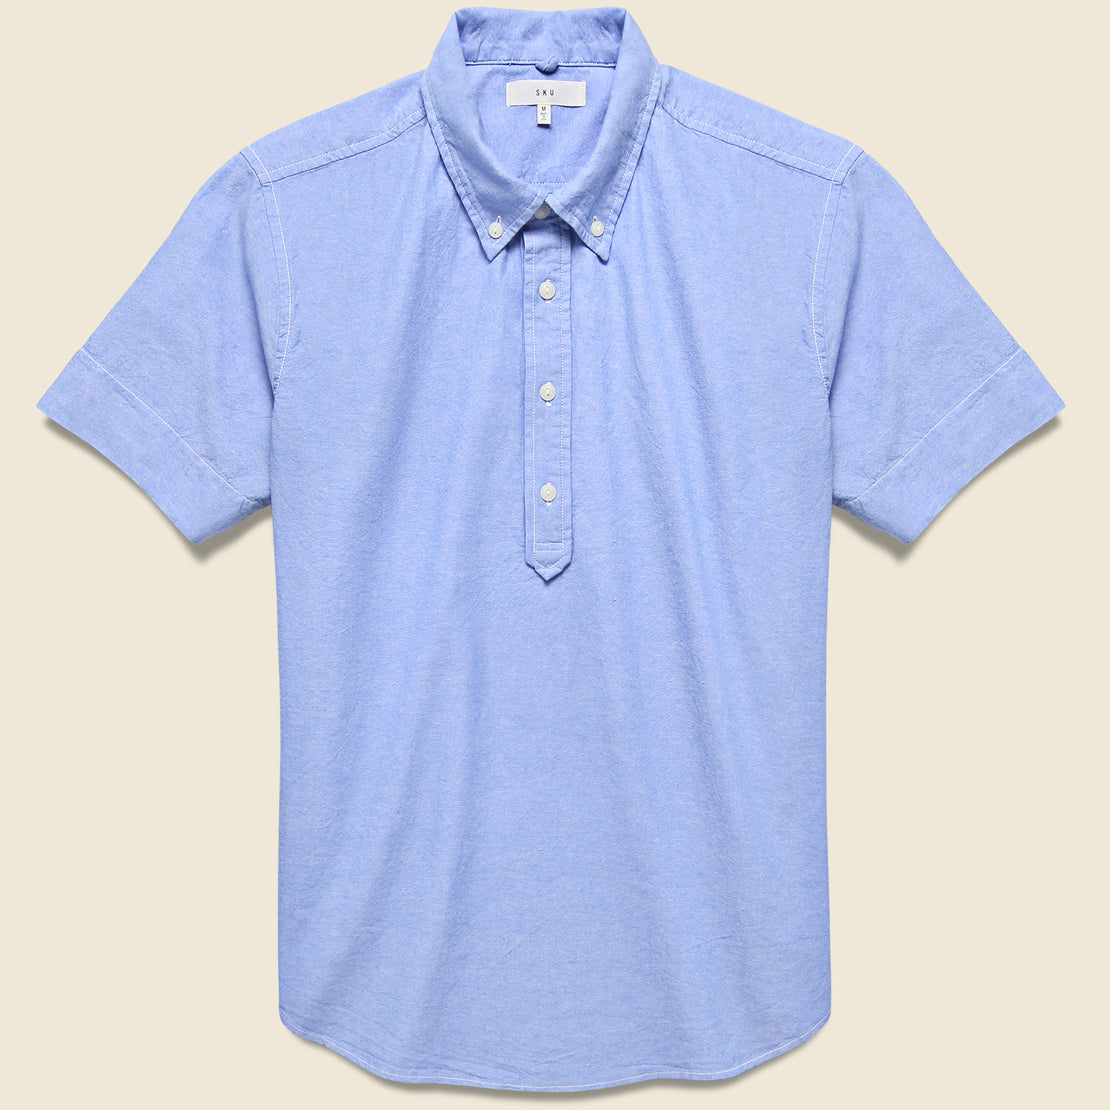 Save Khaki Chambray Popover Shirt - Light Blue